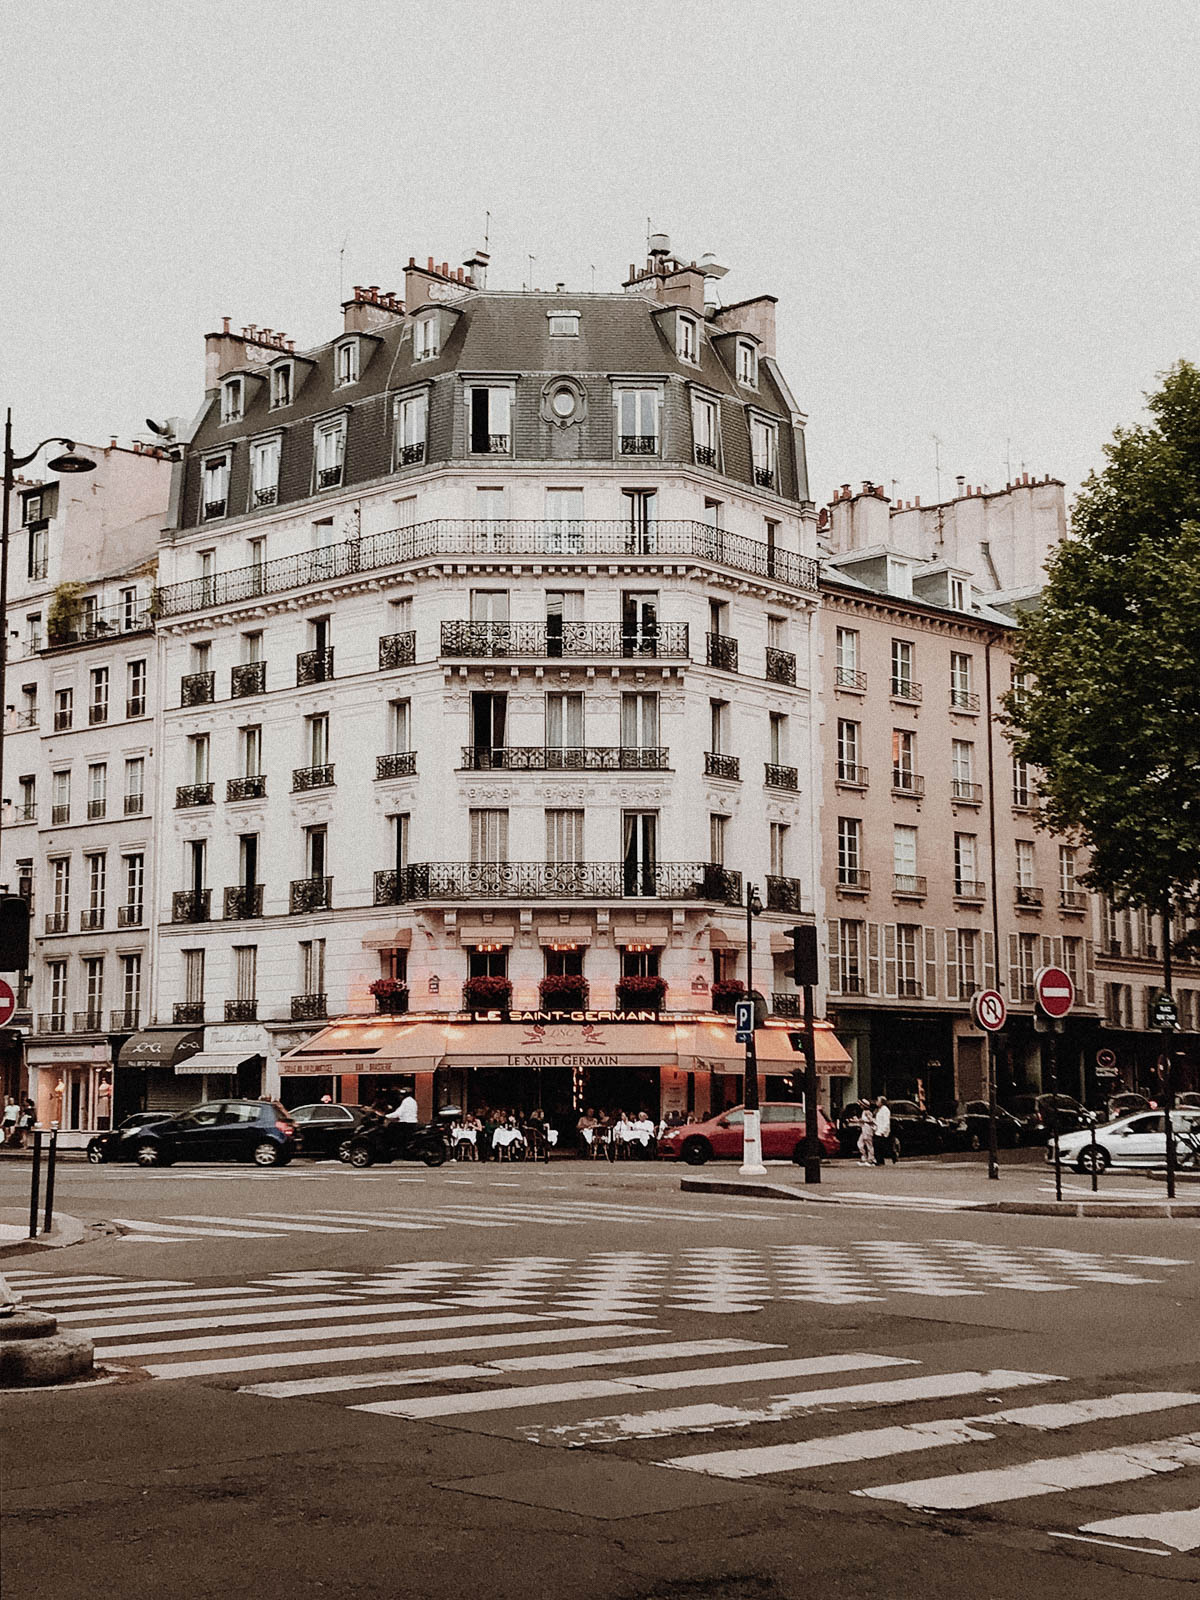 Paris France Travel Guide - Le Saint-Germain Cafe, European Architecture and Buildings / RG Daily Blog